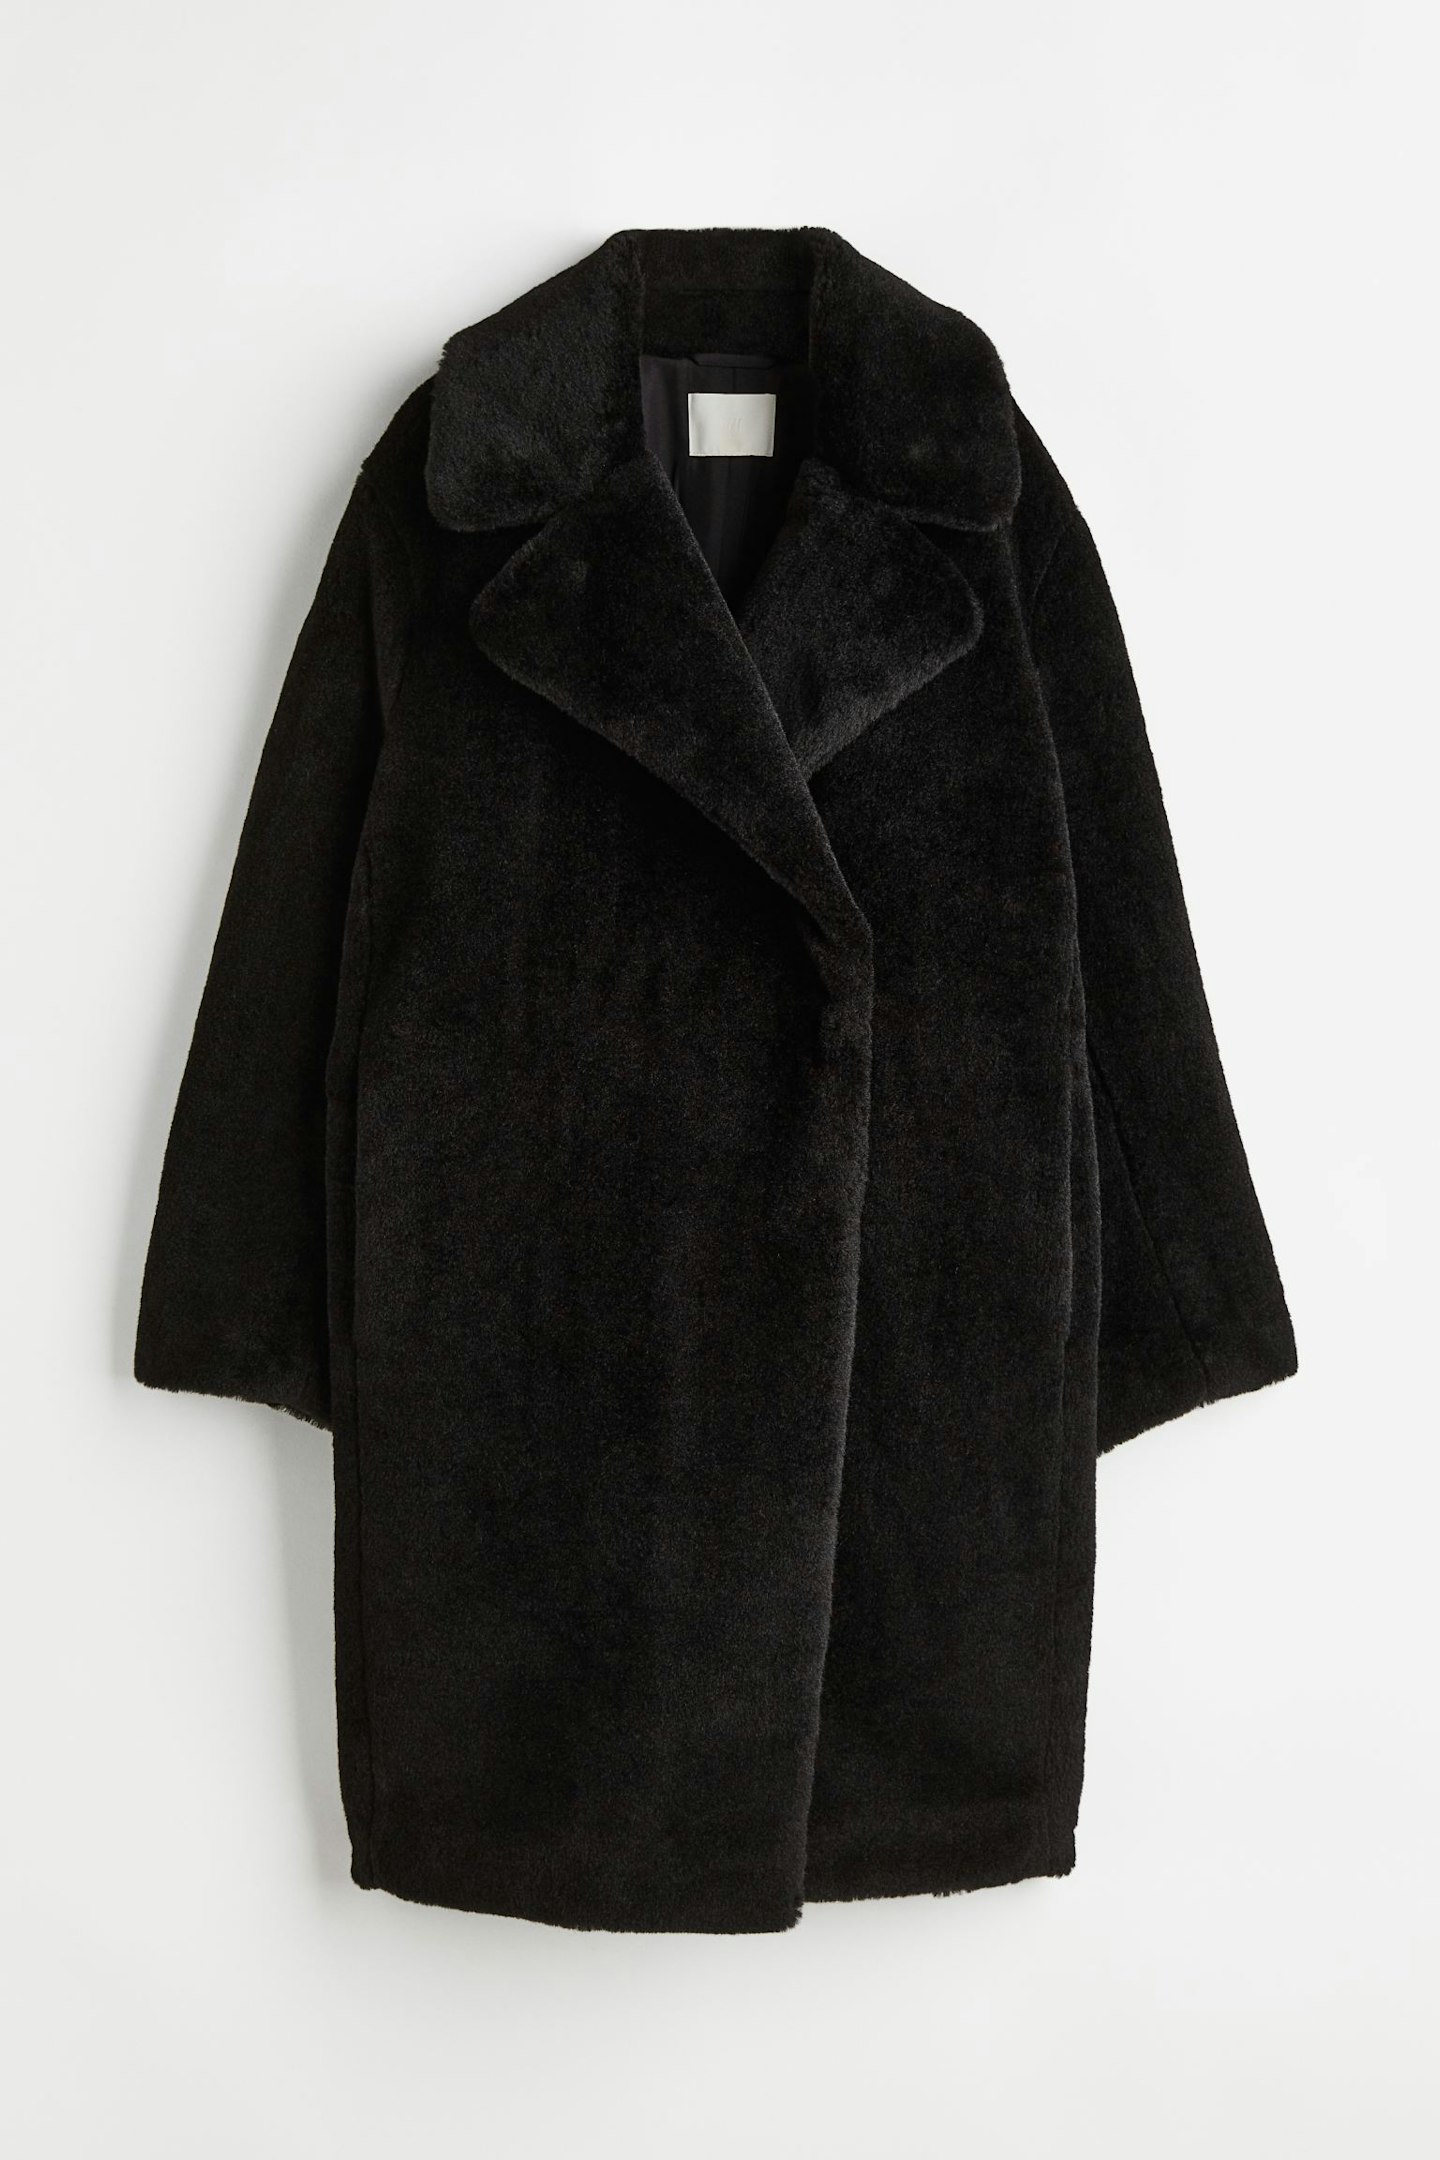 H&M faux fur jacket selena gomez